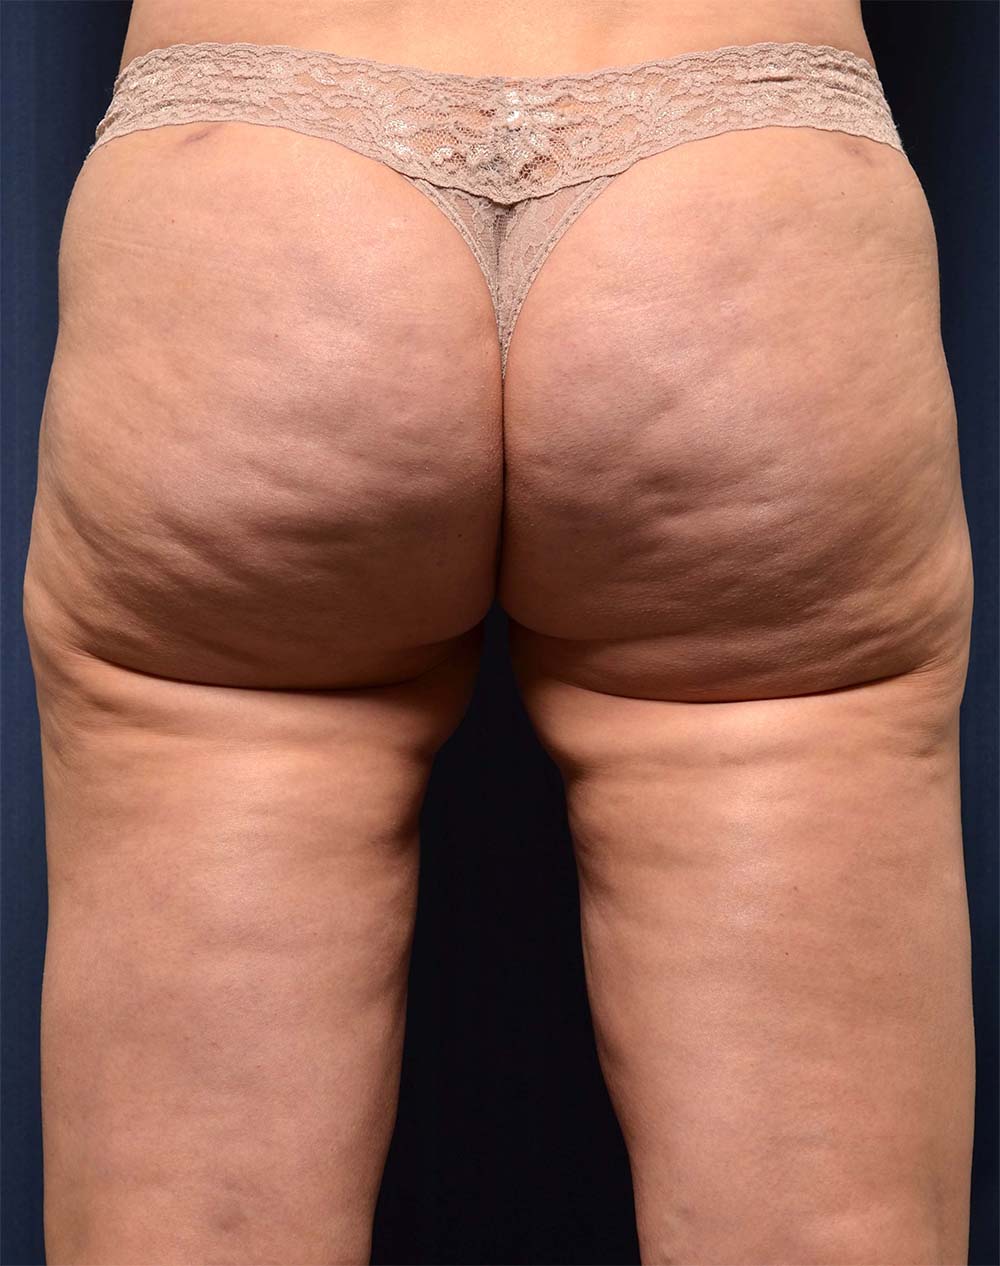 Liposuction